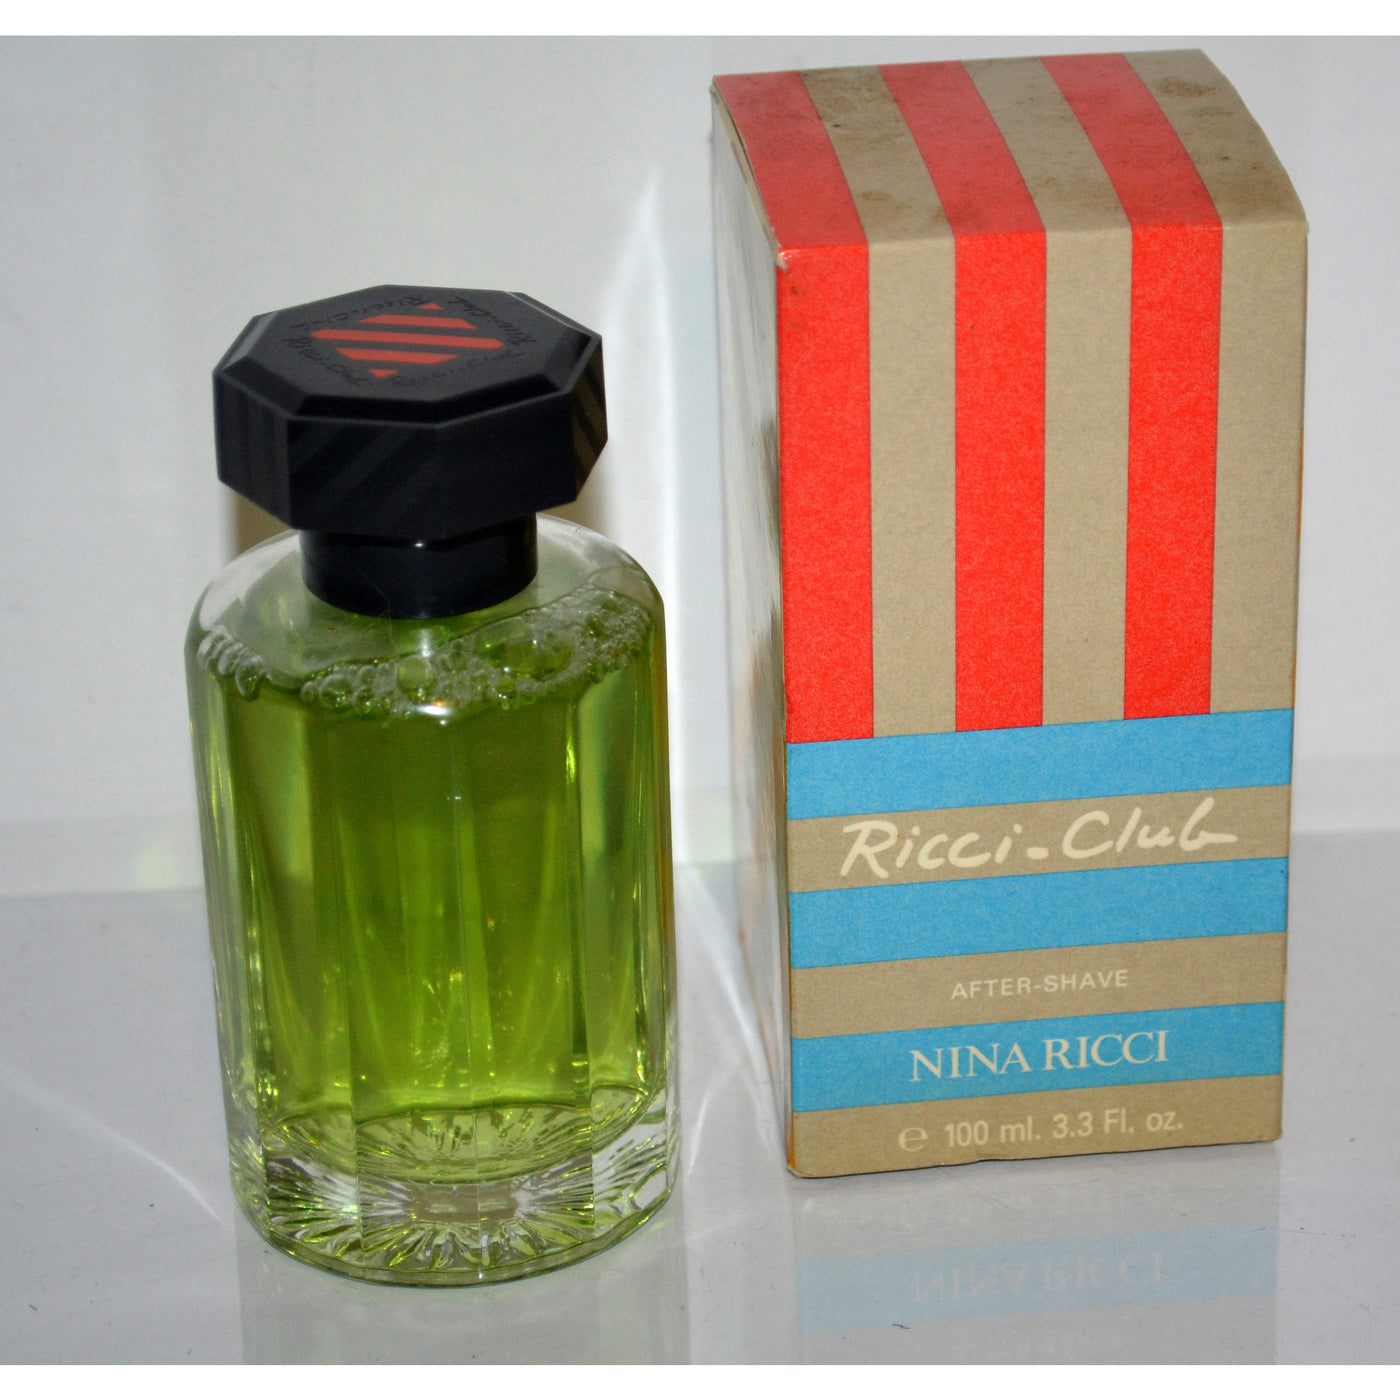 Vintage Ricci-Club After Shave By Nina Ricci 